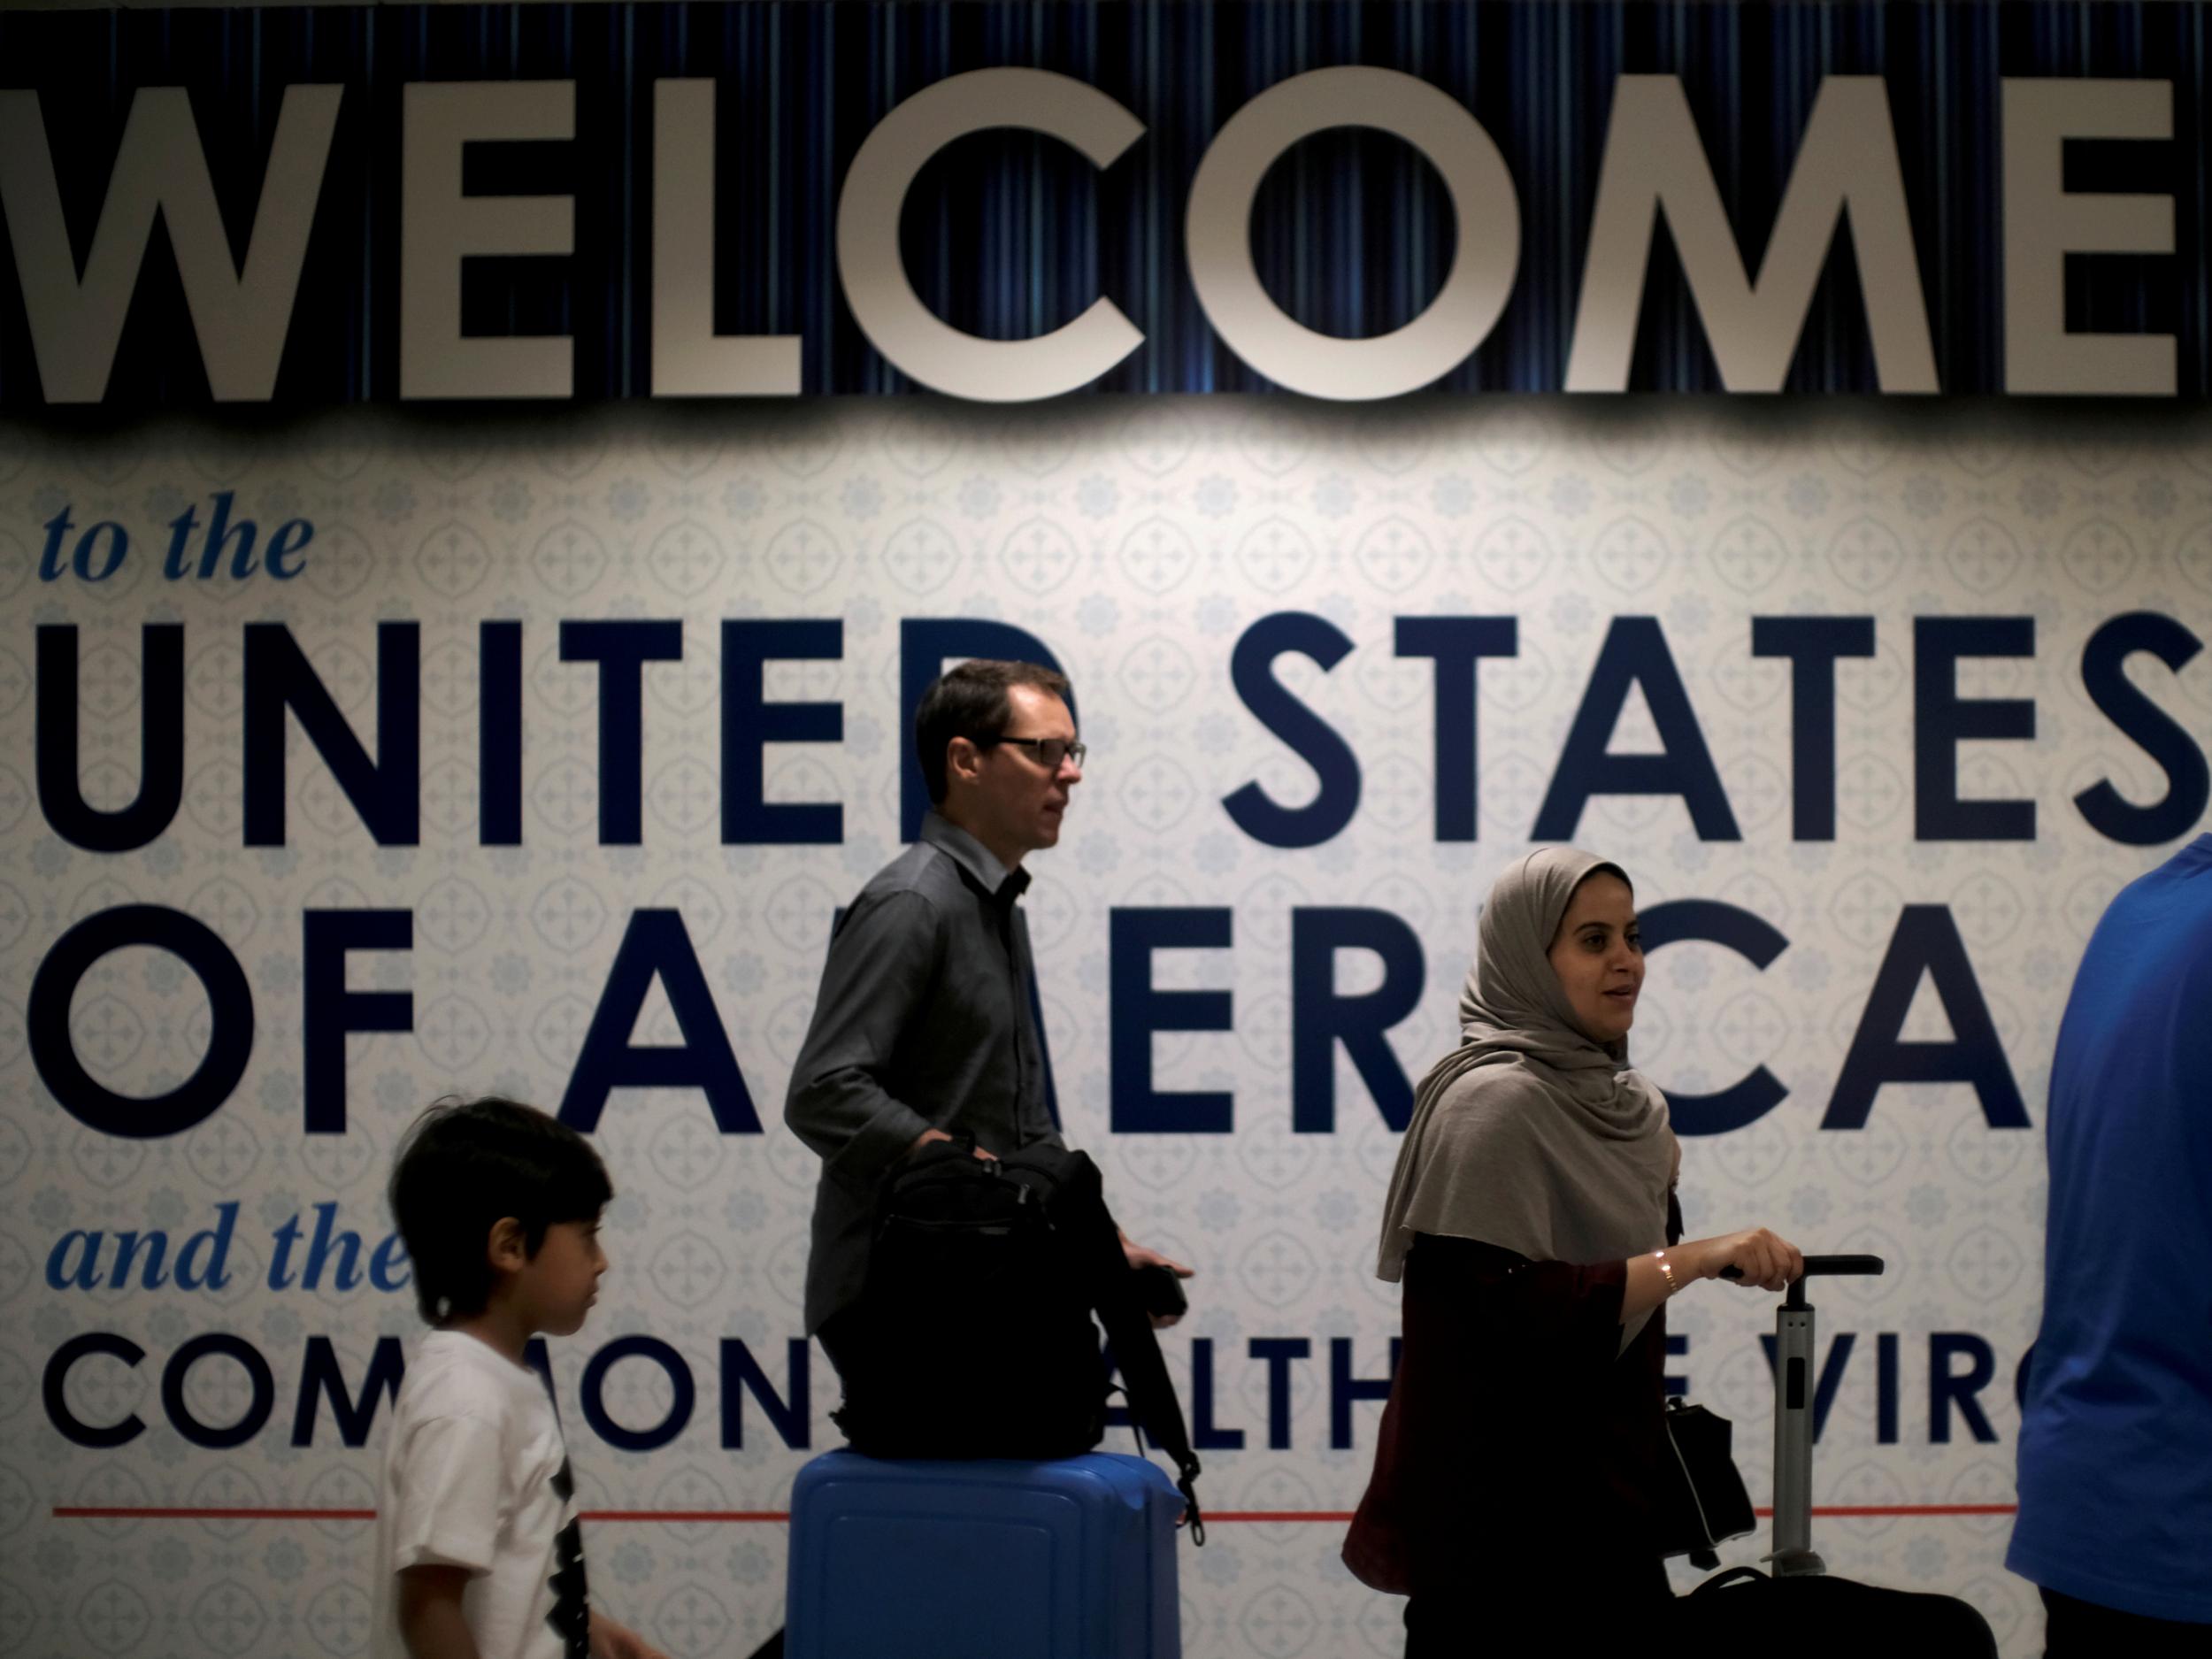 International passengers arrive at Washington Dulles International Airport in Virginia